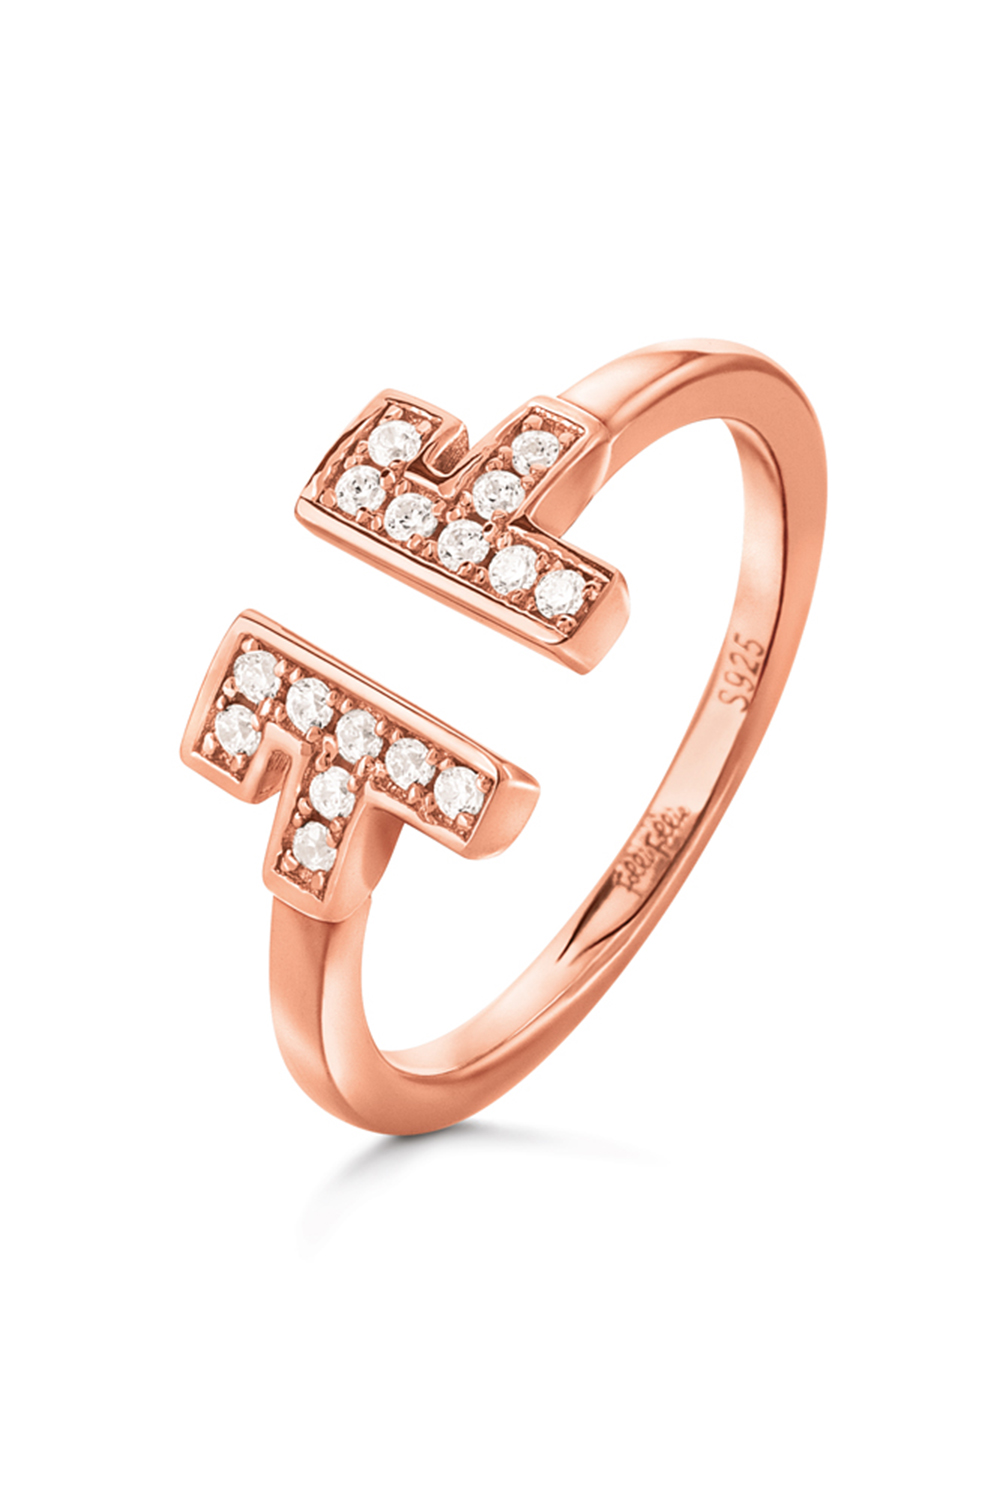 FOLLI FOLLIE – Γυναικείο ασημένιο δαχτυλίδι FOLLI FOLLIE MY FF ροζ χρυσό 3R18S007RC